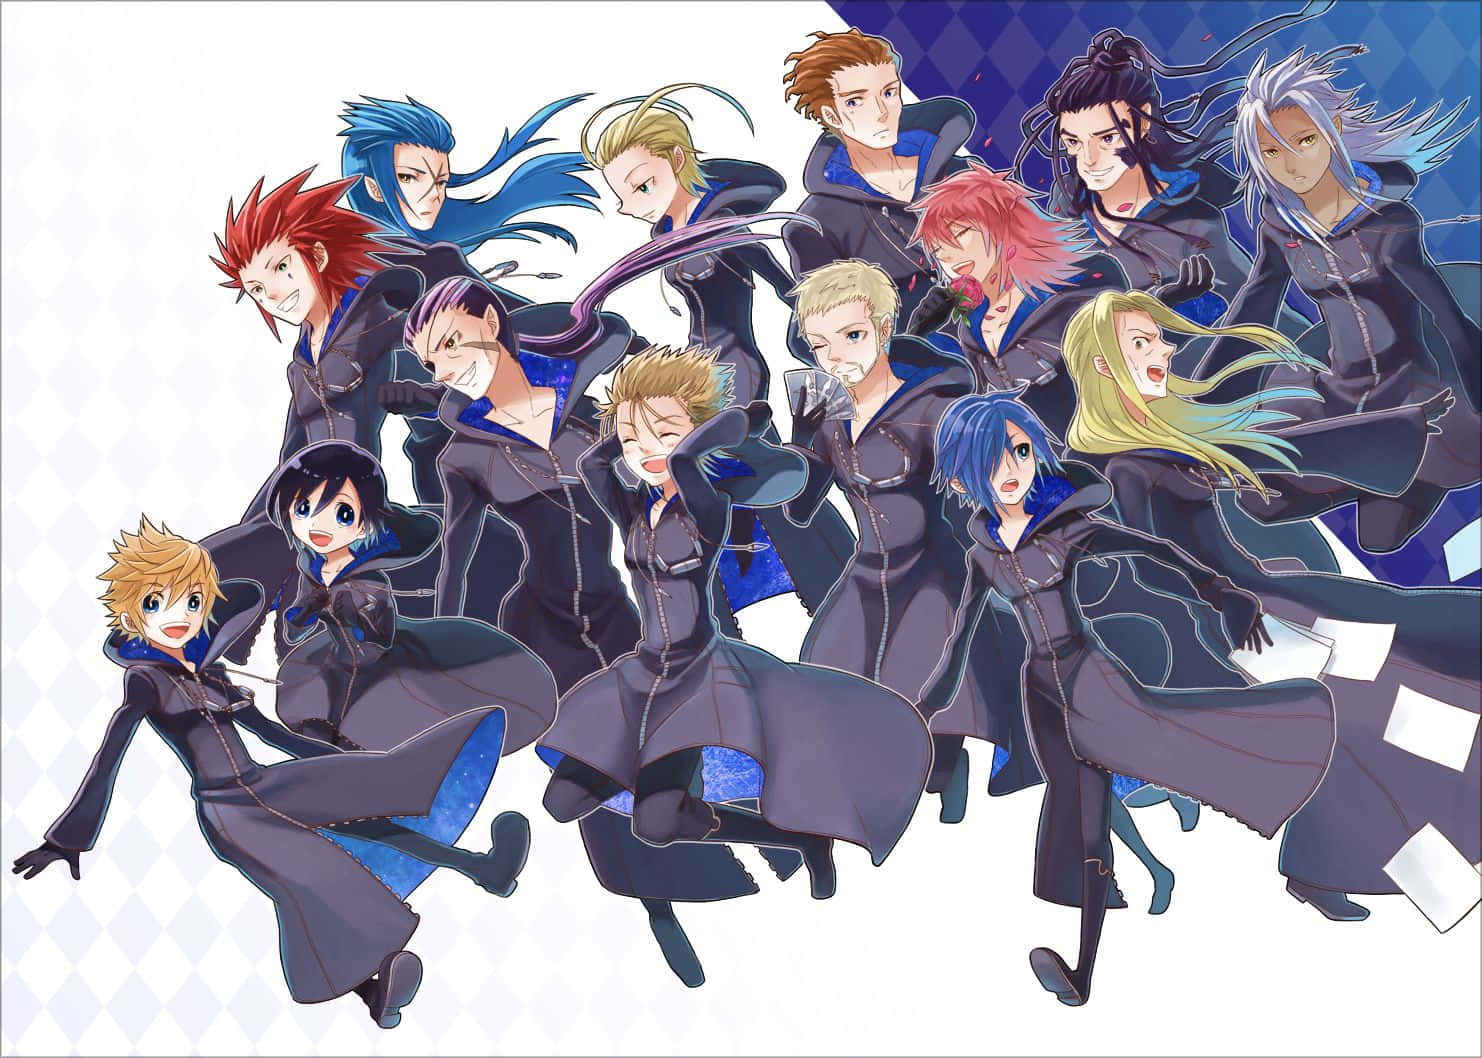 Mysterious Members of Organization XIII in Kingdom Hearts Wallpaper